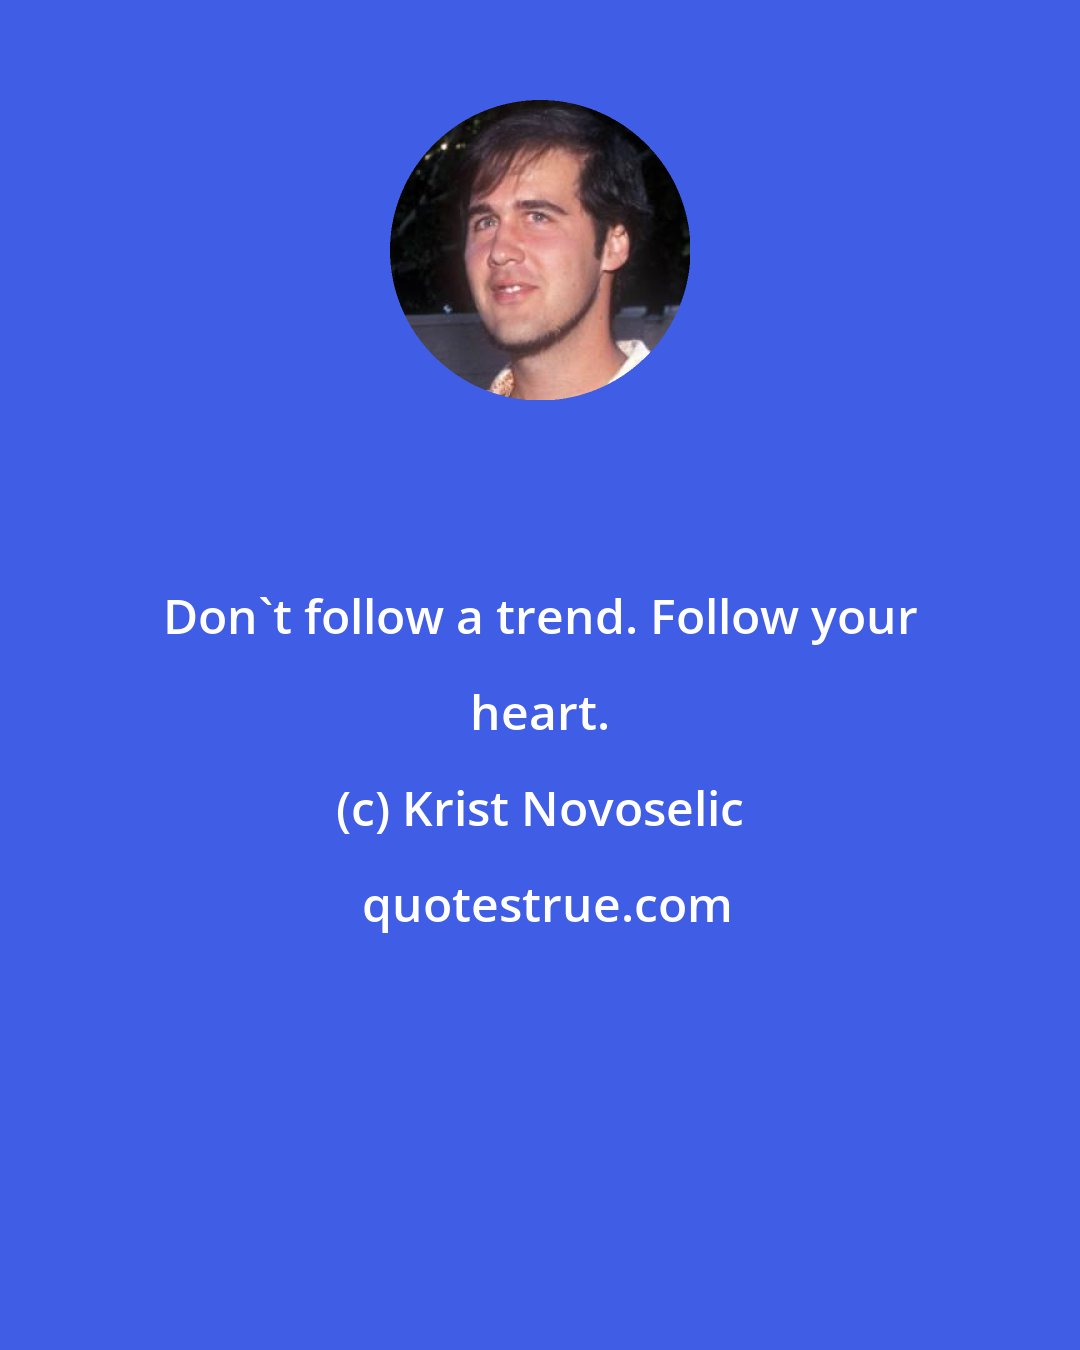 Krist Novoselic: Don't follow a trend. Follow your heart.